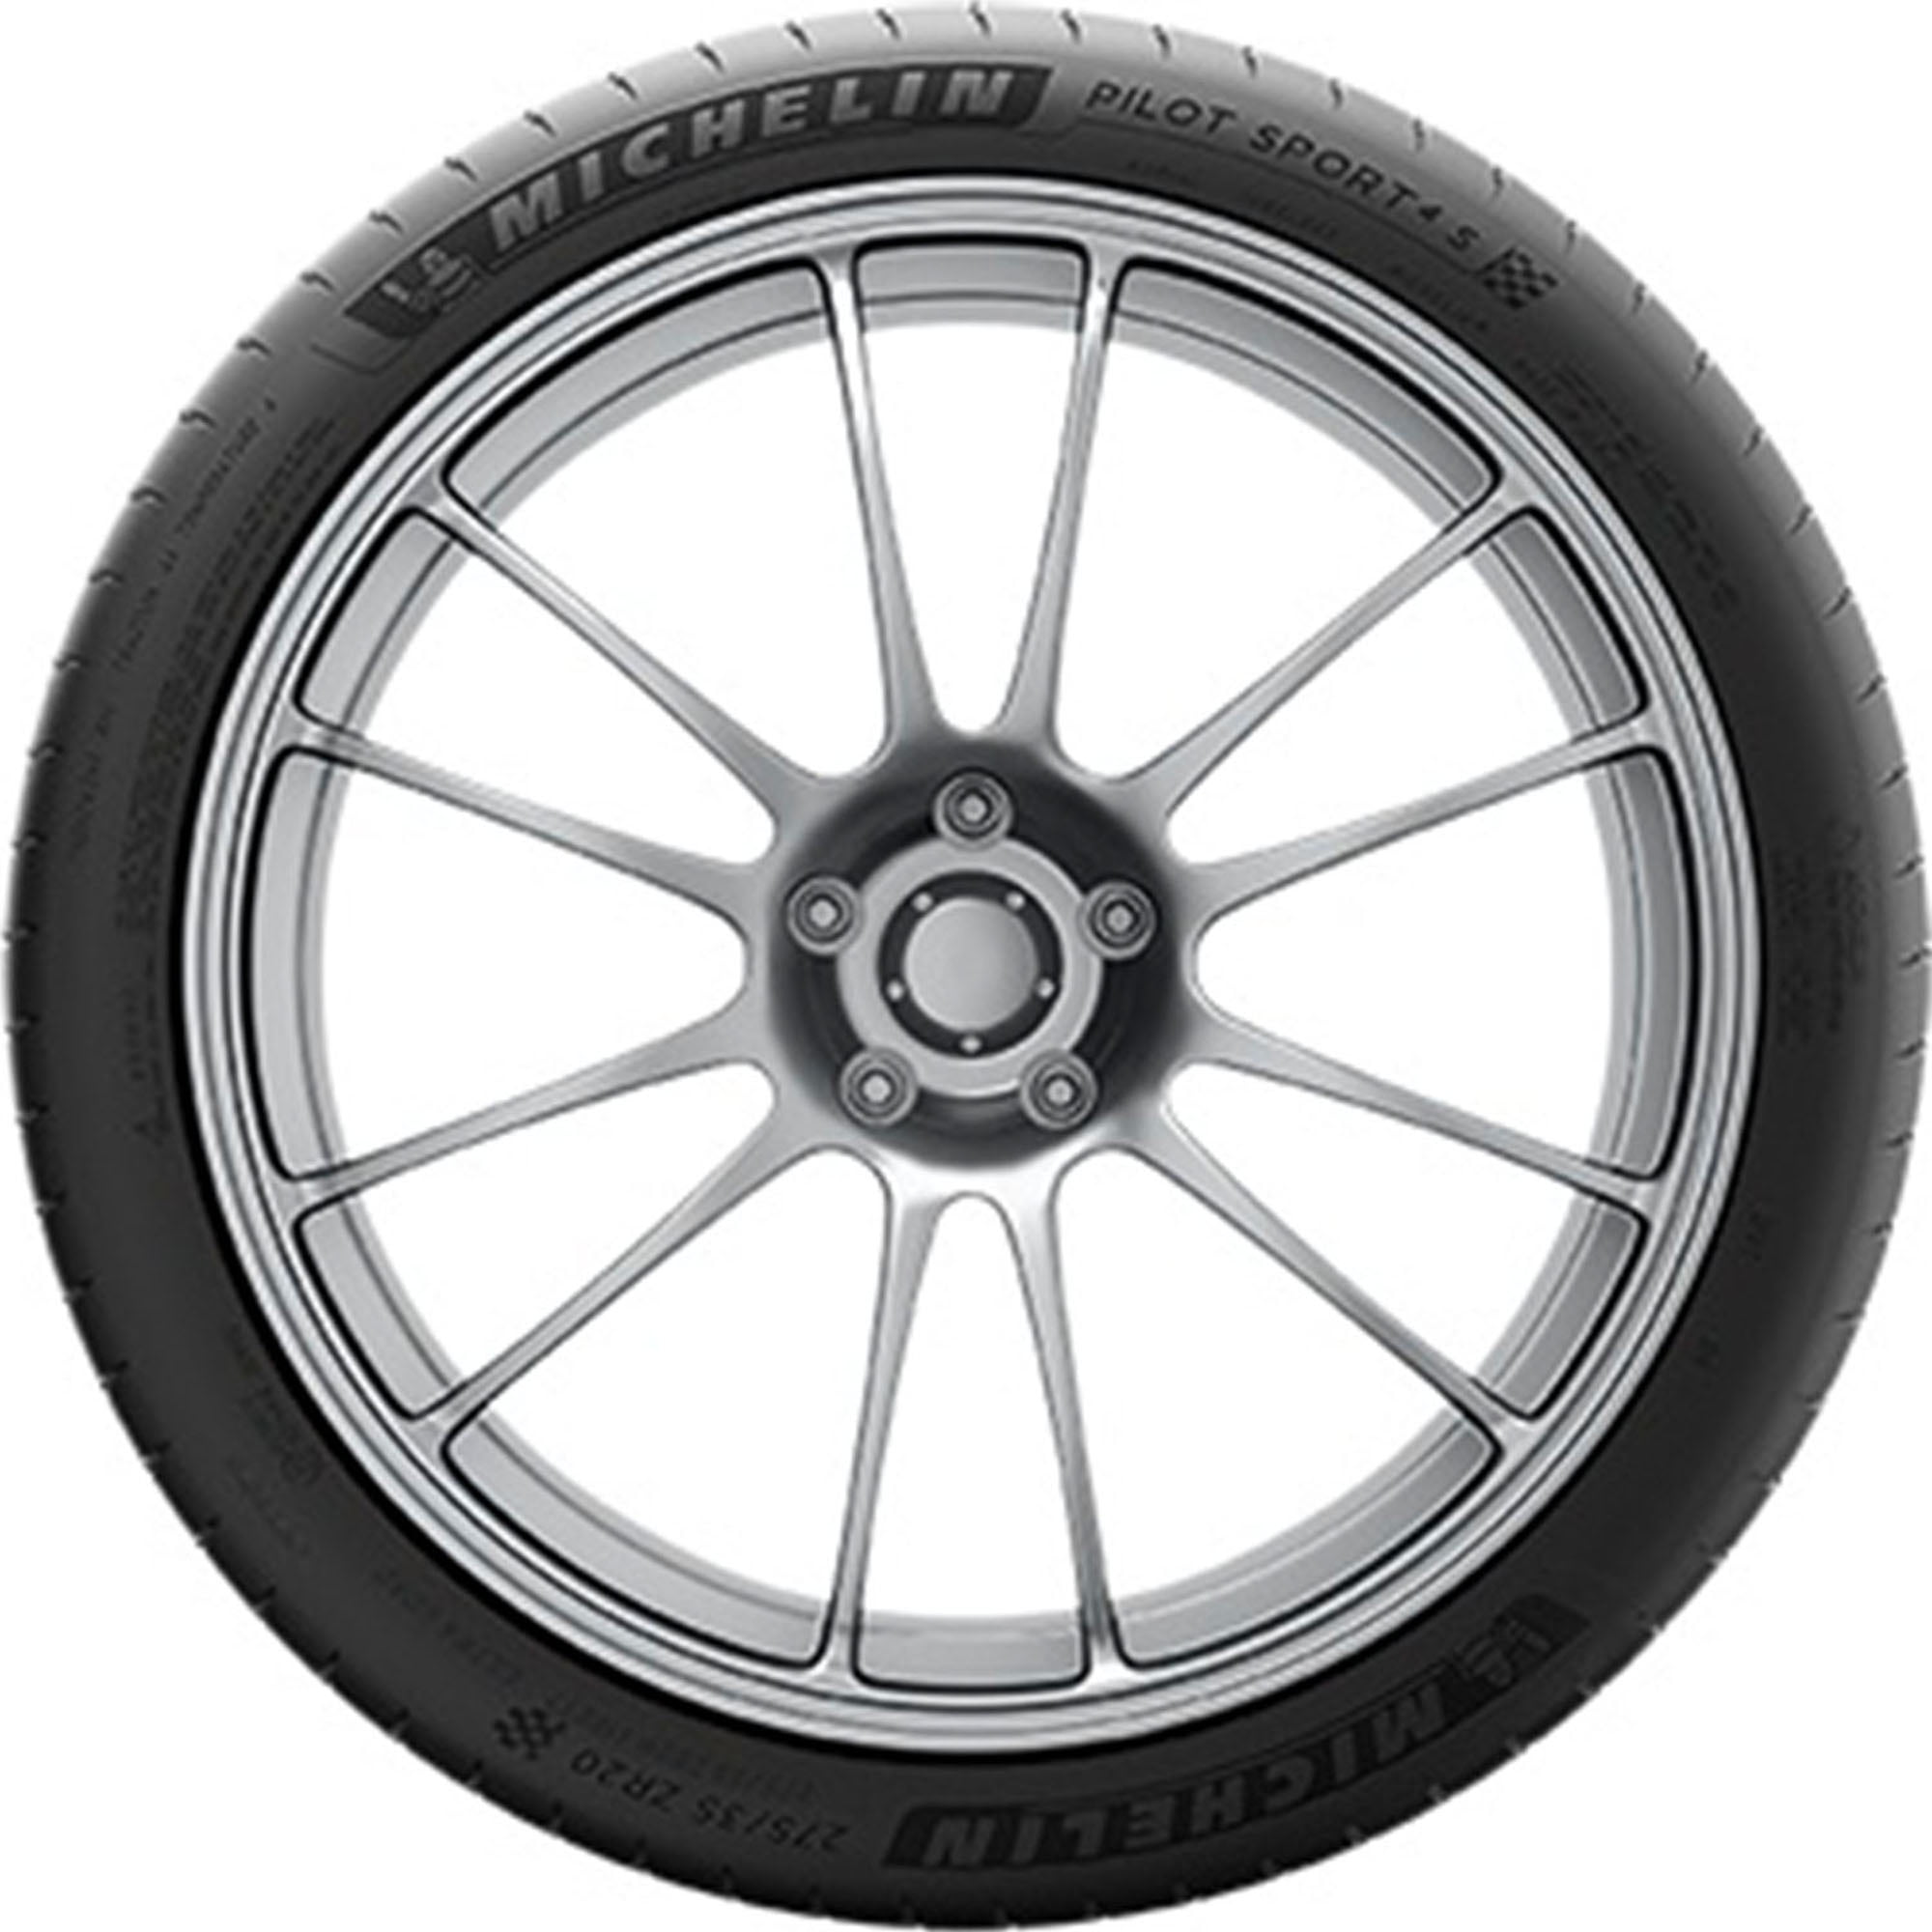 Passenger Sport Pilot XL Performance (94Y) 4S 225/45ZR17 Michelin Tire